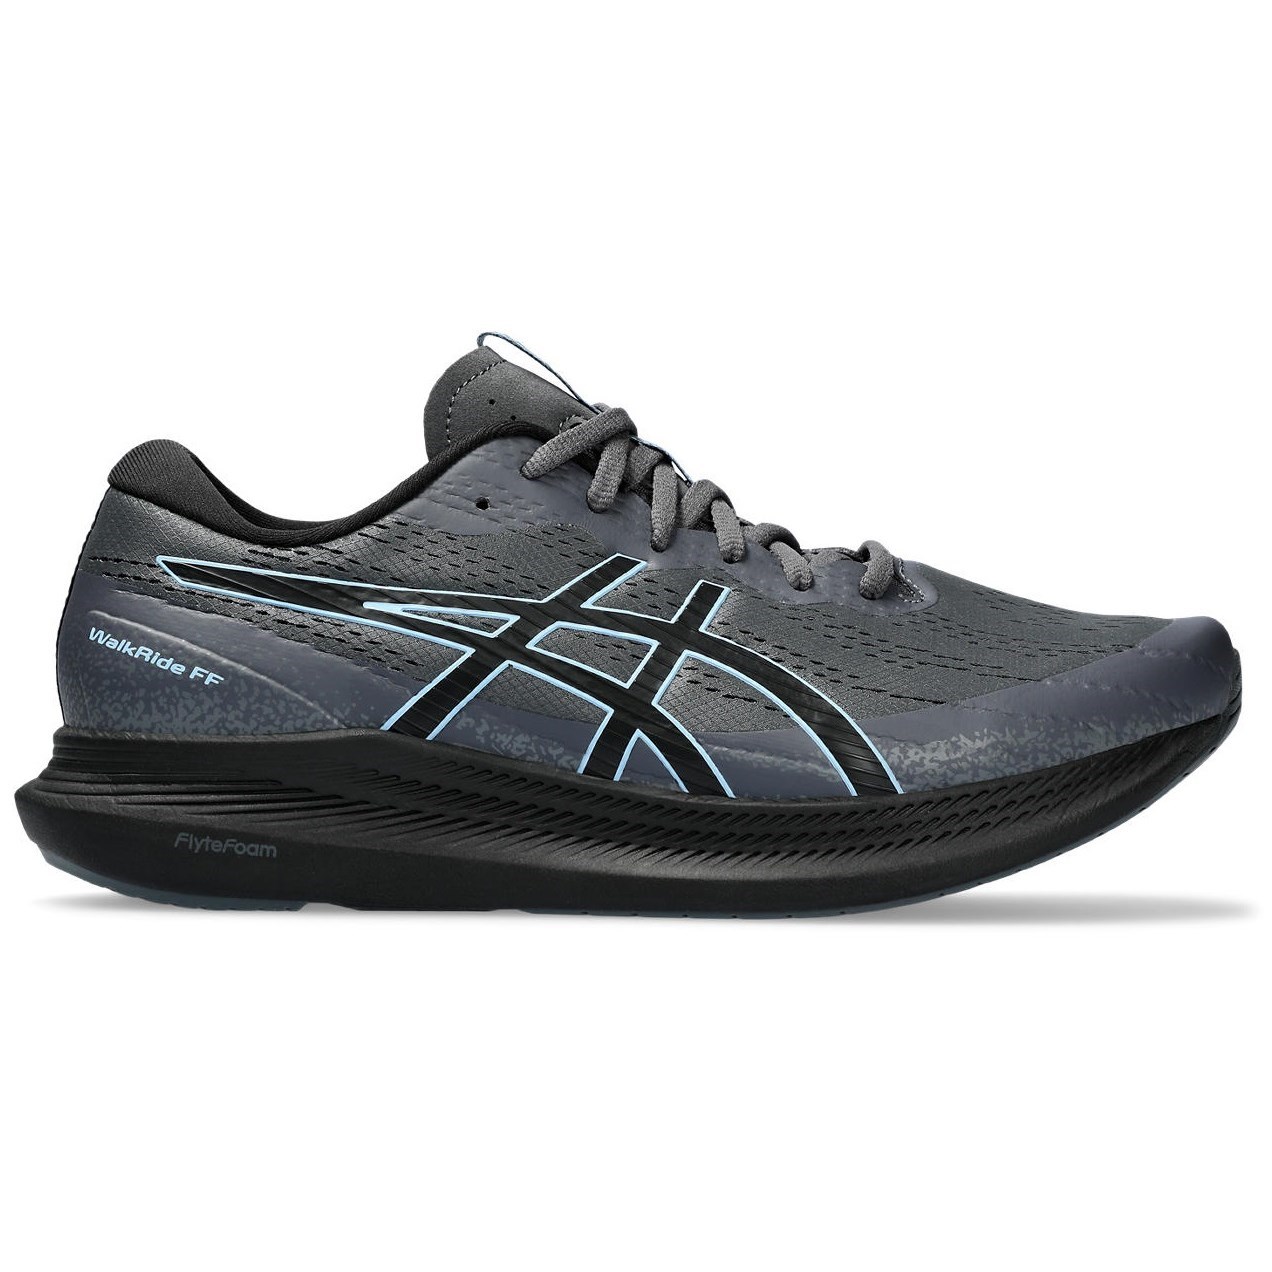 Asics Walkride FF - Mens Walking Shoes - Carrier Grey/Black | Sportitude